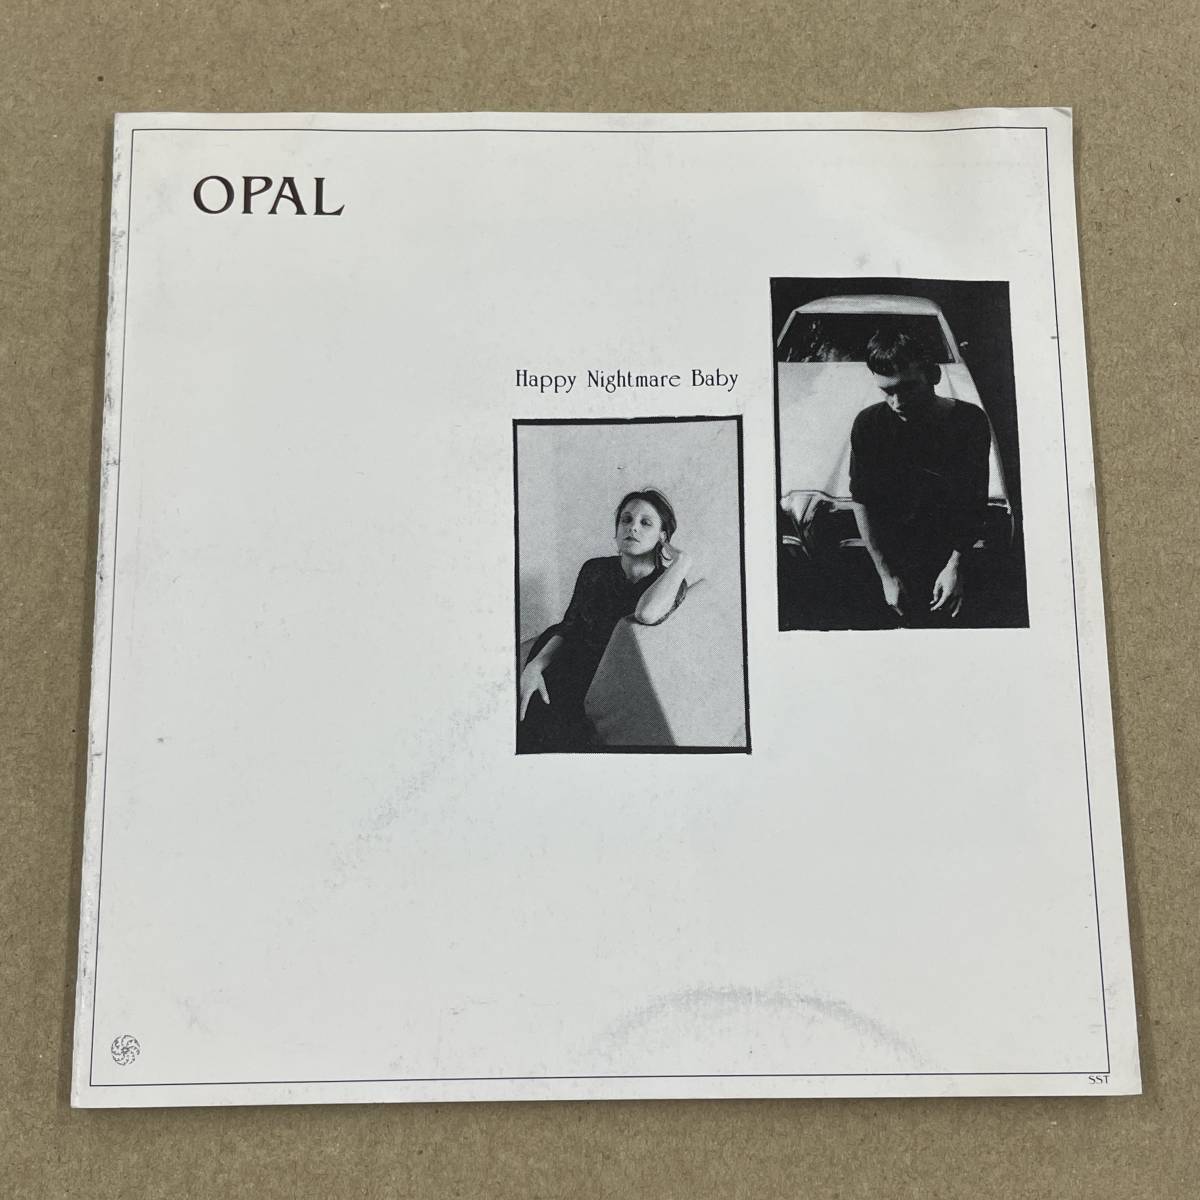 [CD] Opal - Happy Nightmare Baby [SST CD 103] オパール Mazzy Star 関連 Rain Parade Dream Syndicate SST Rough Trade_画像4